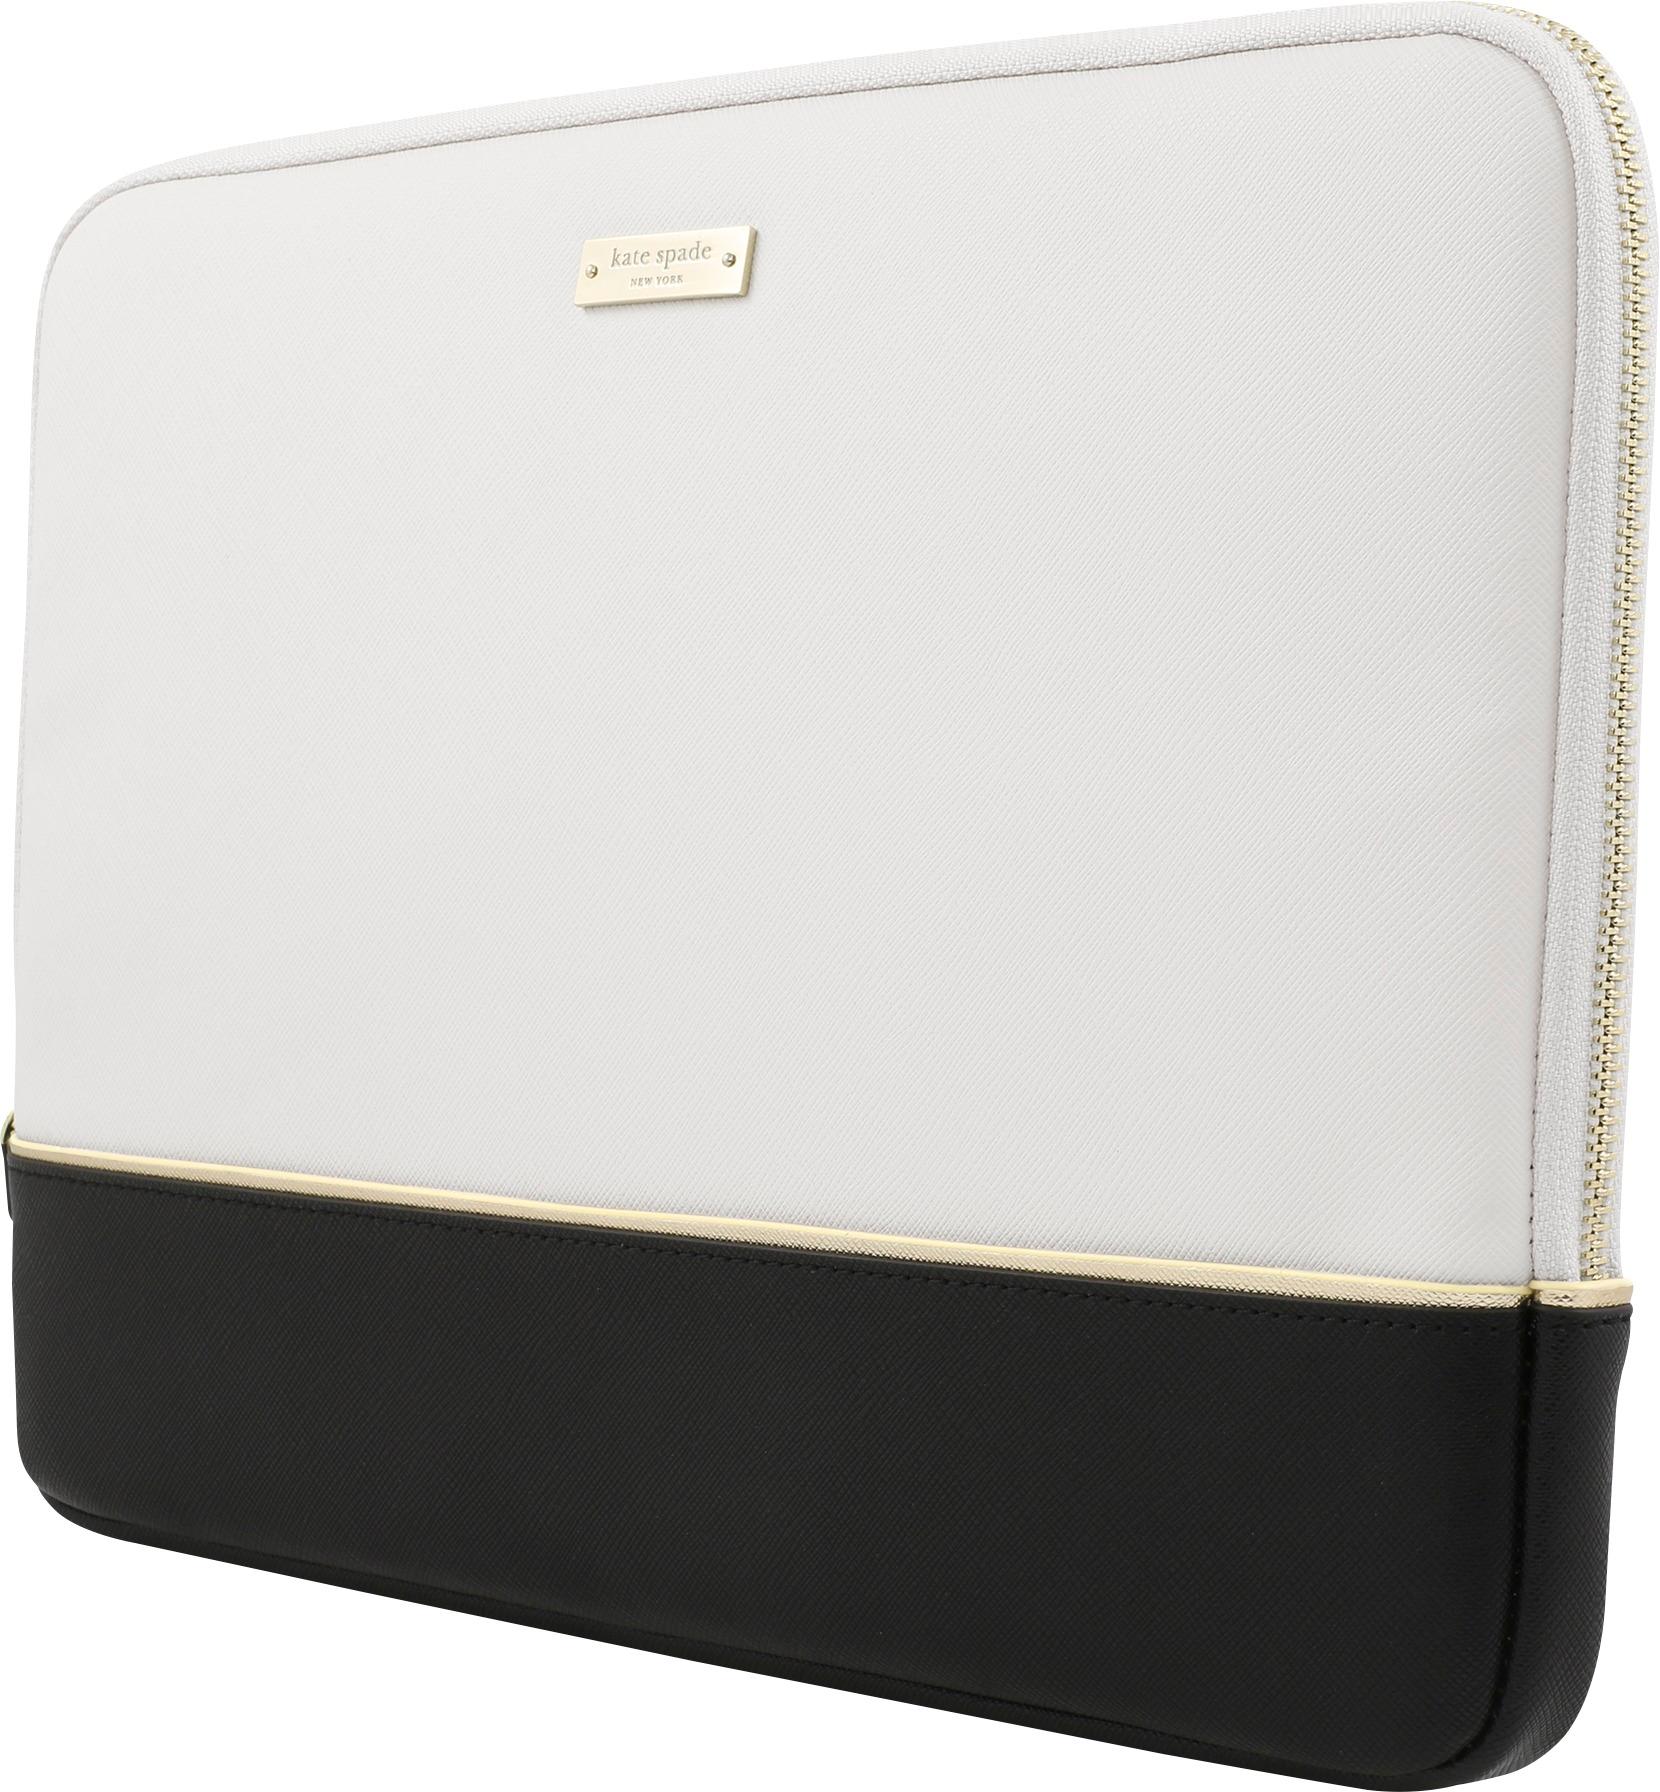 Best Buy: kate spade new york Laptop Sleeve Black/Gold/Cement KSMB-019-BCG